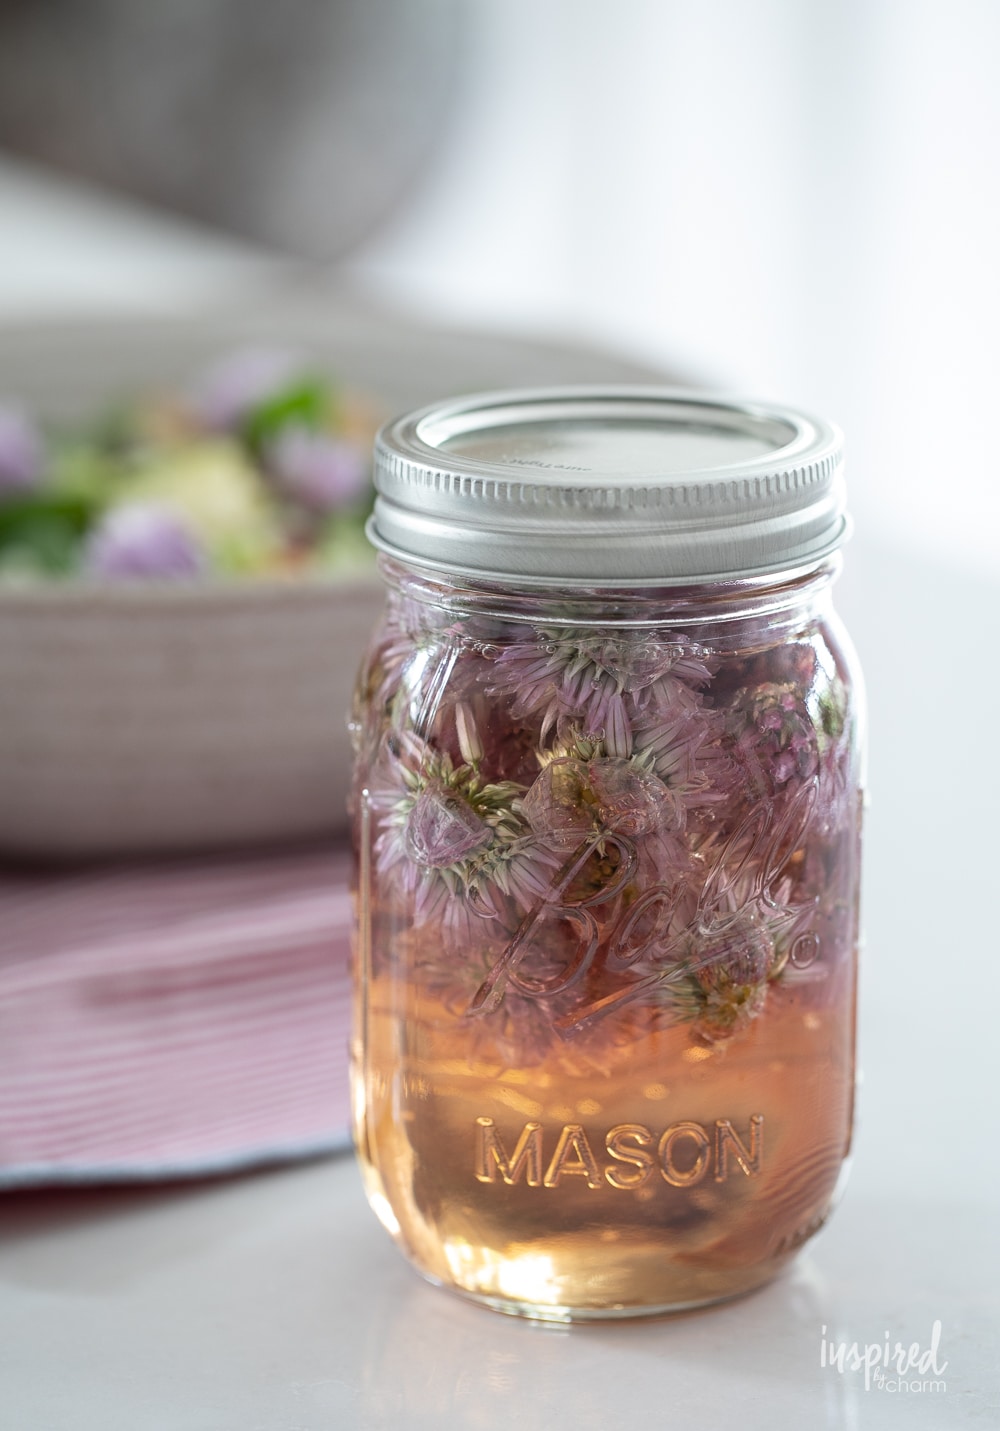 chive blossom vinegar in a mason jar.